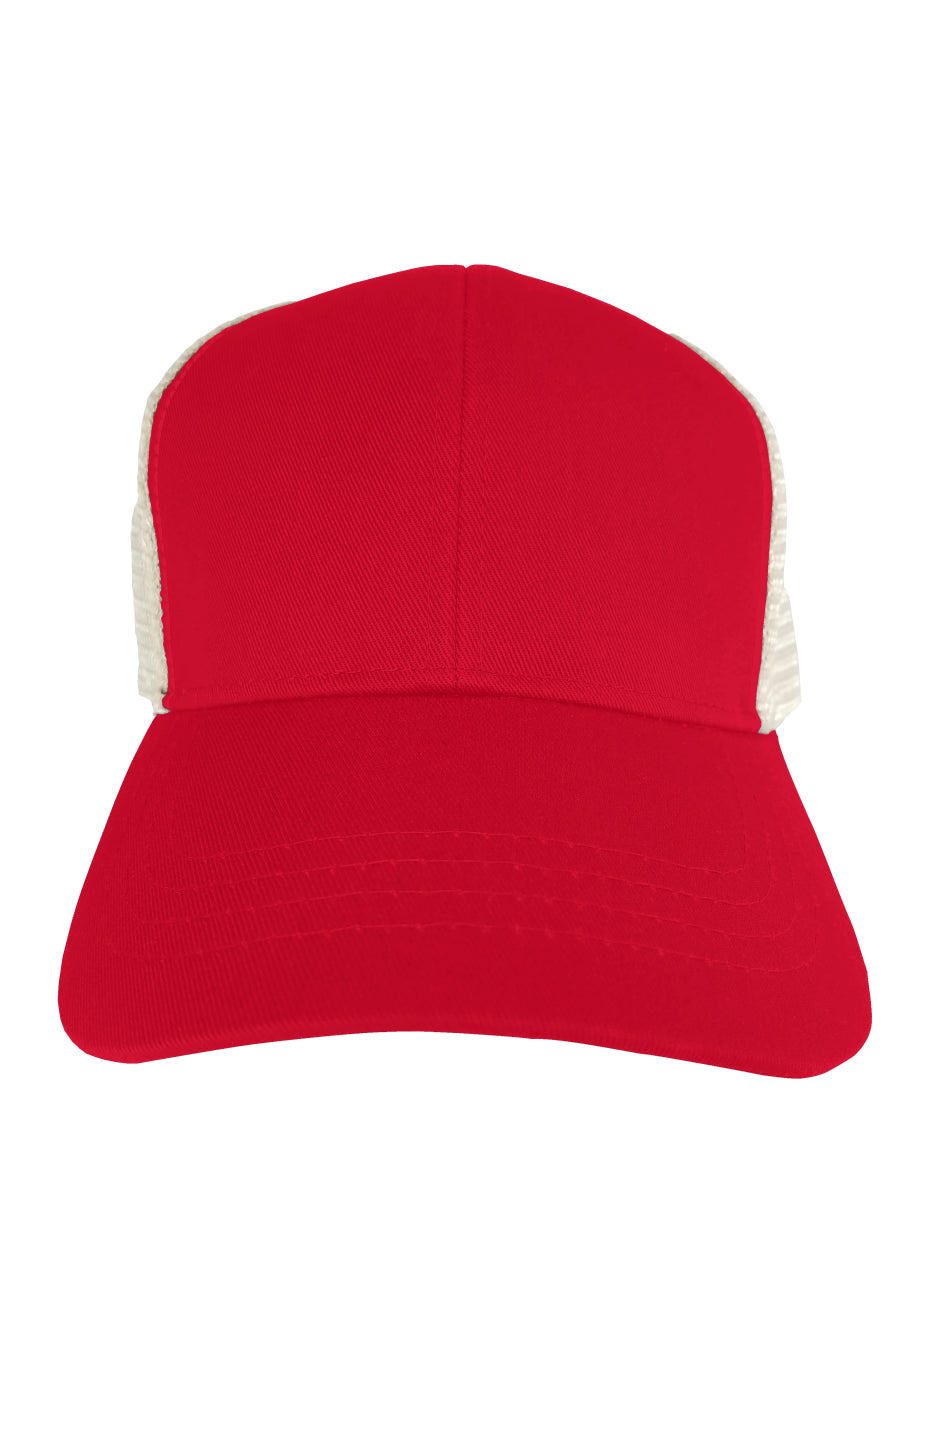 Logo Trucker Hat-Red